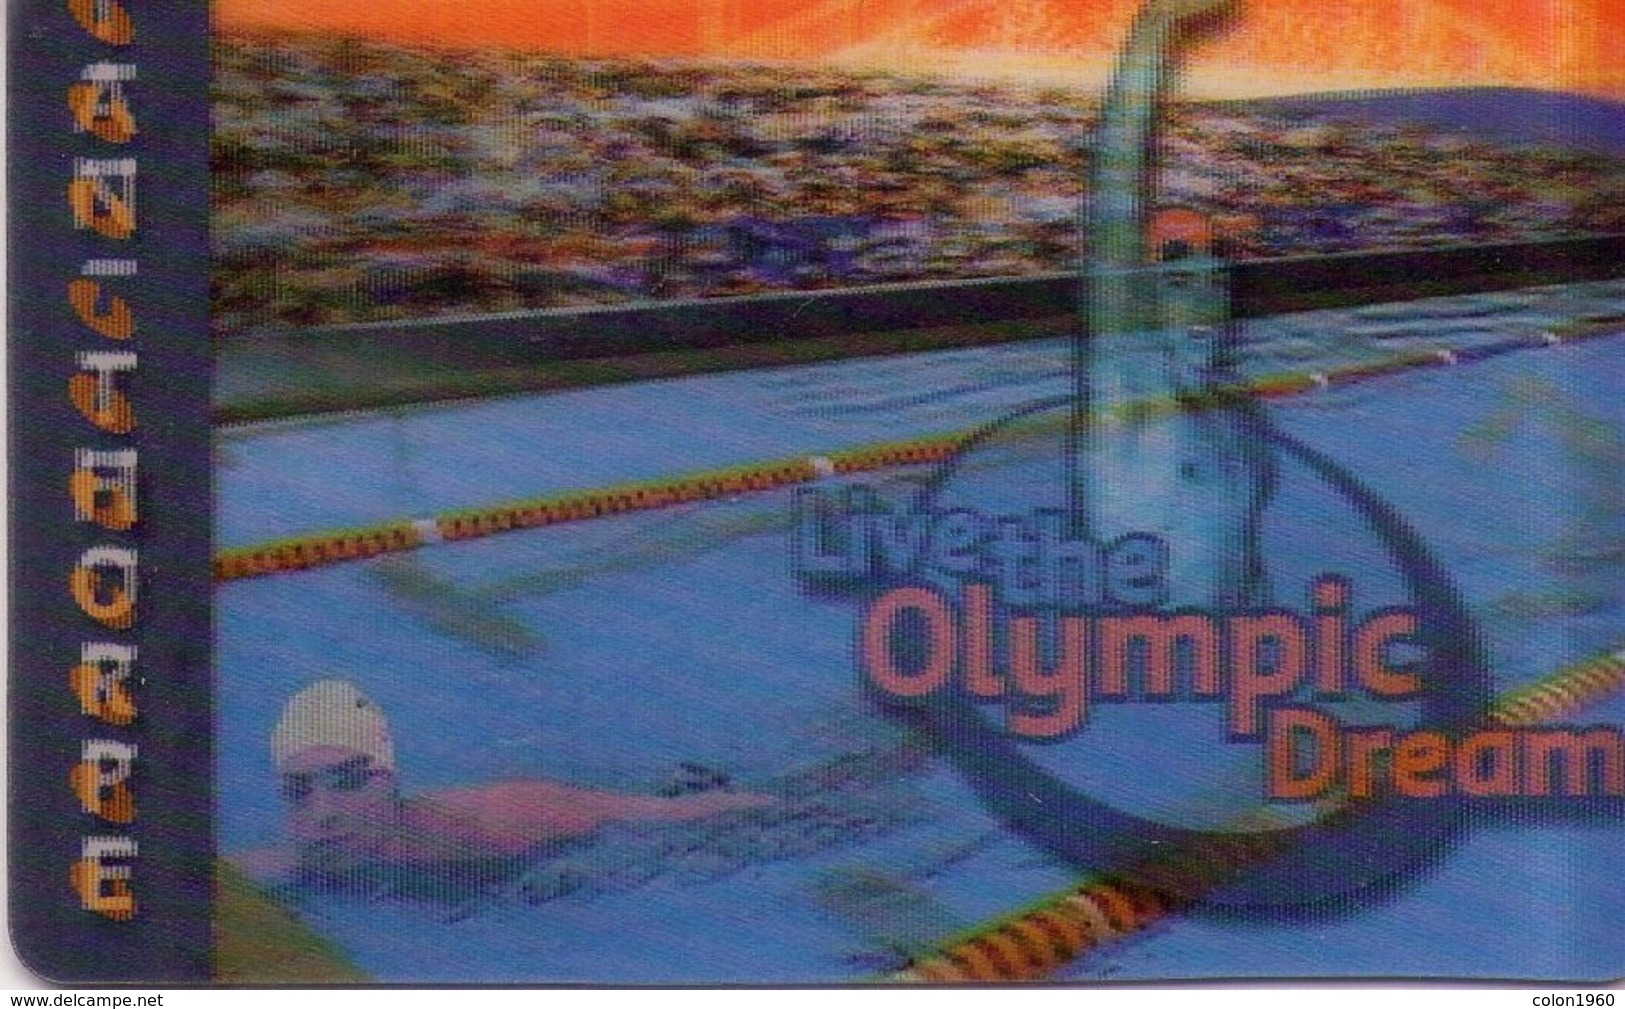 AUSTRALIA. 9900043PA. Holographic 3D. Living The Olympic Dream - Ian Thorpe. (012) - Australia